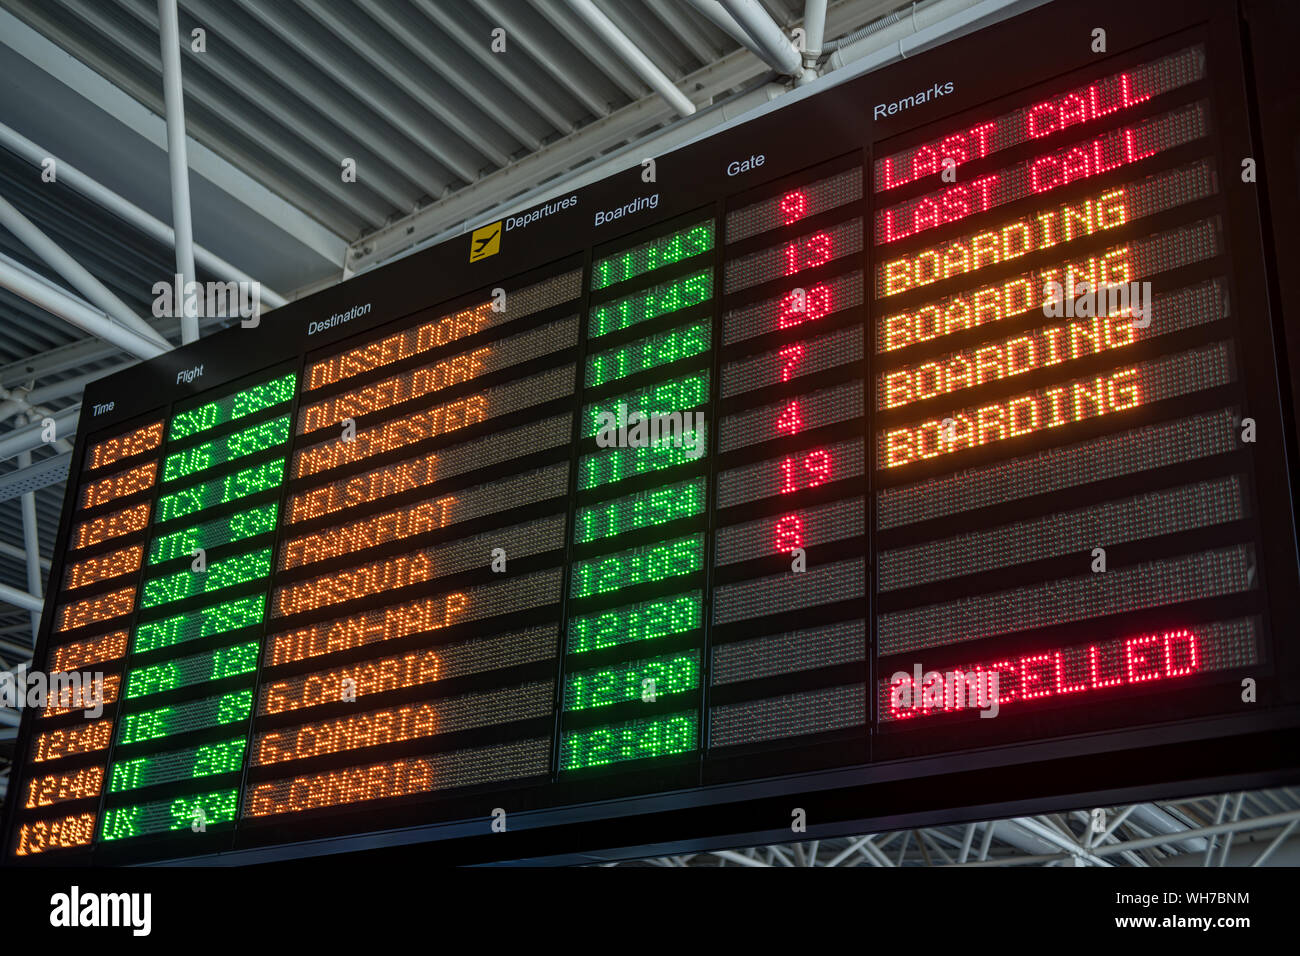 Flight information display system in international airport Stock Photo